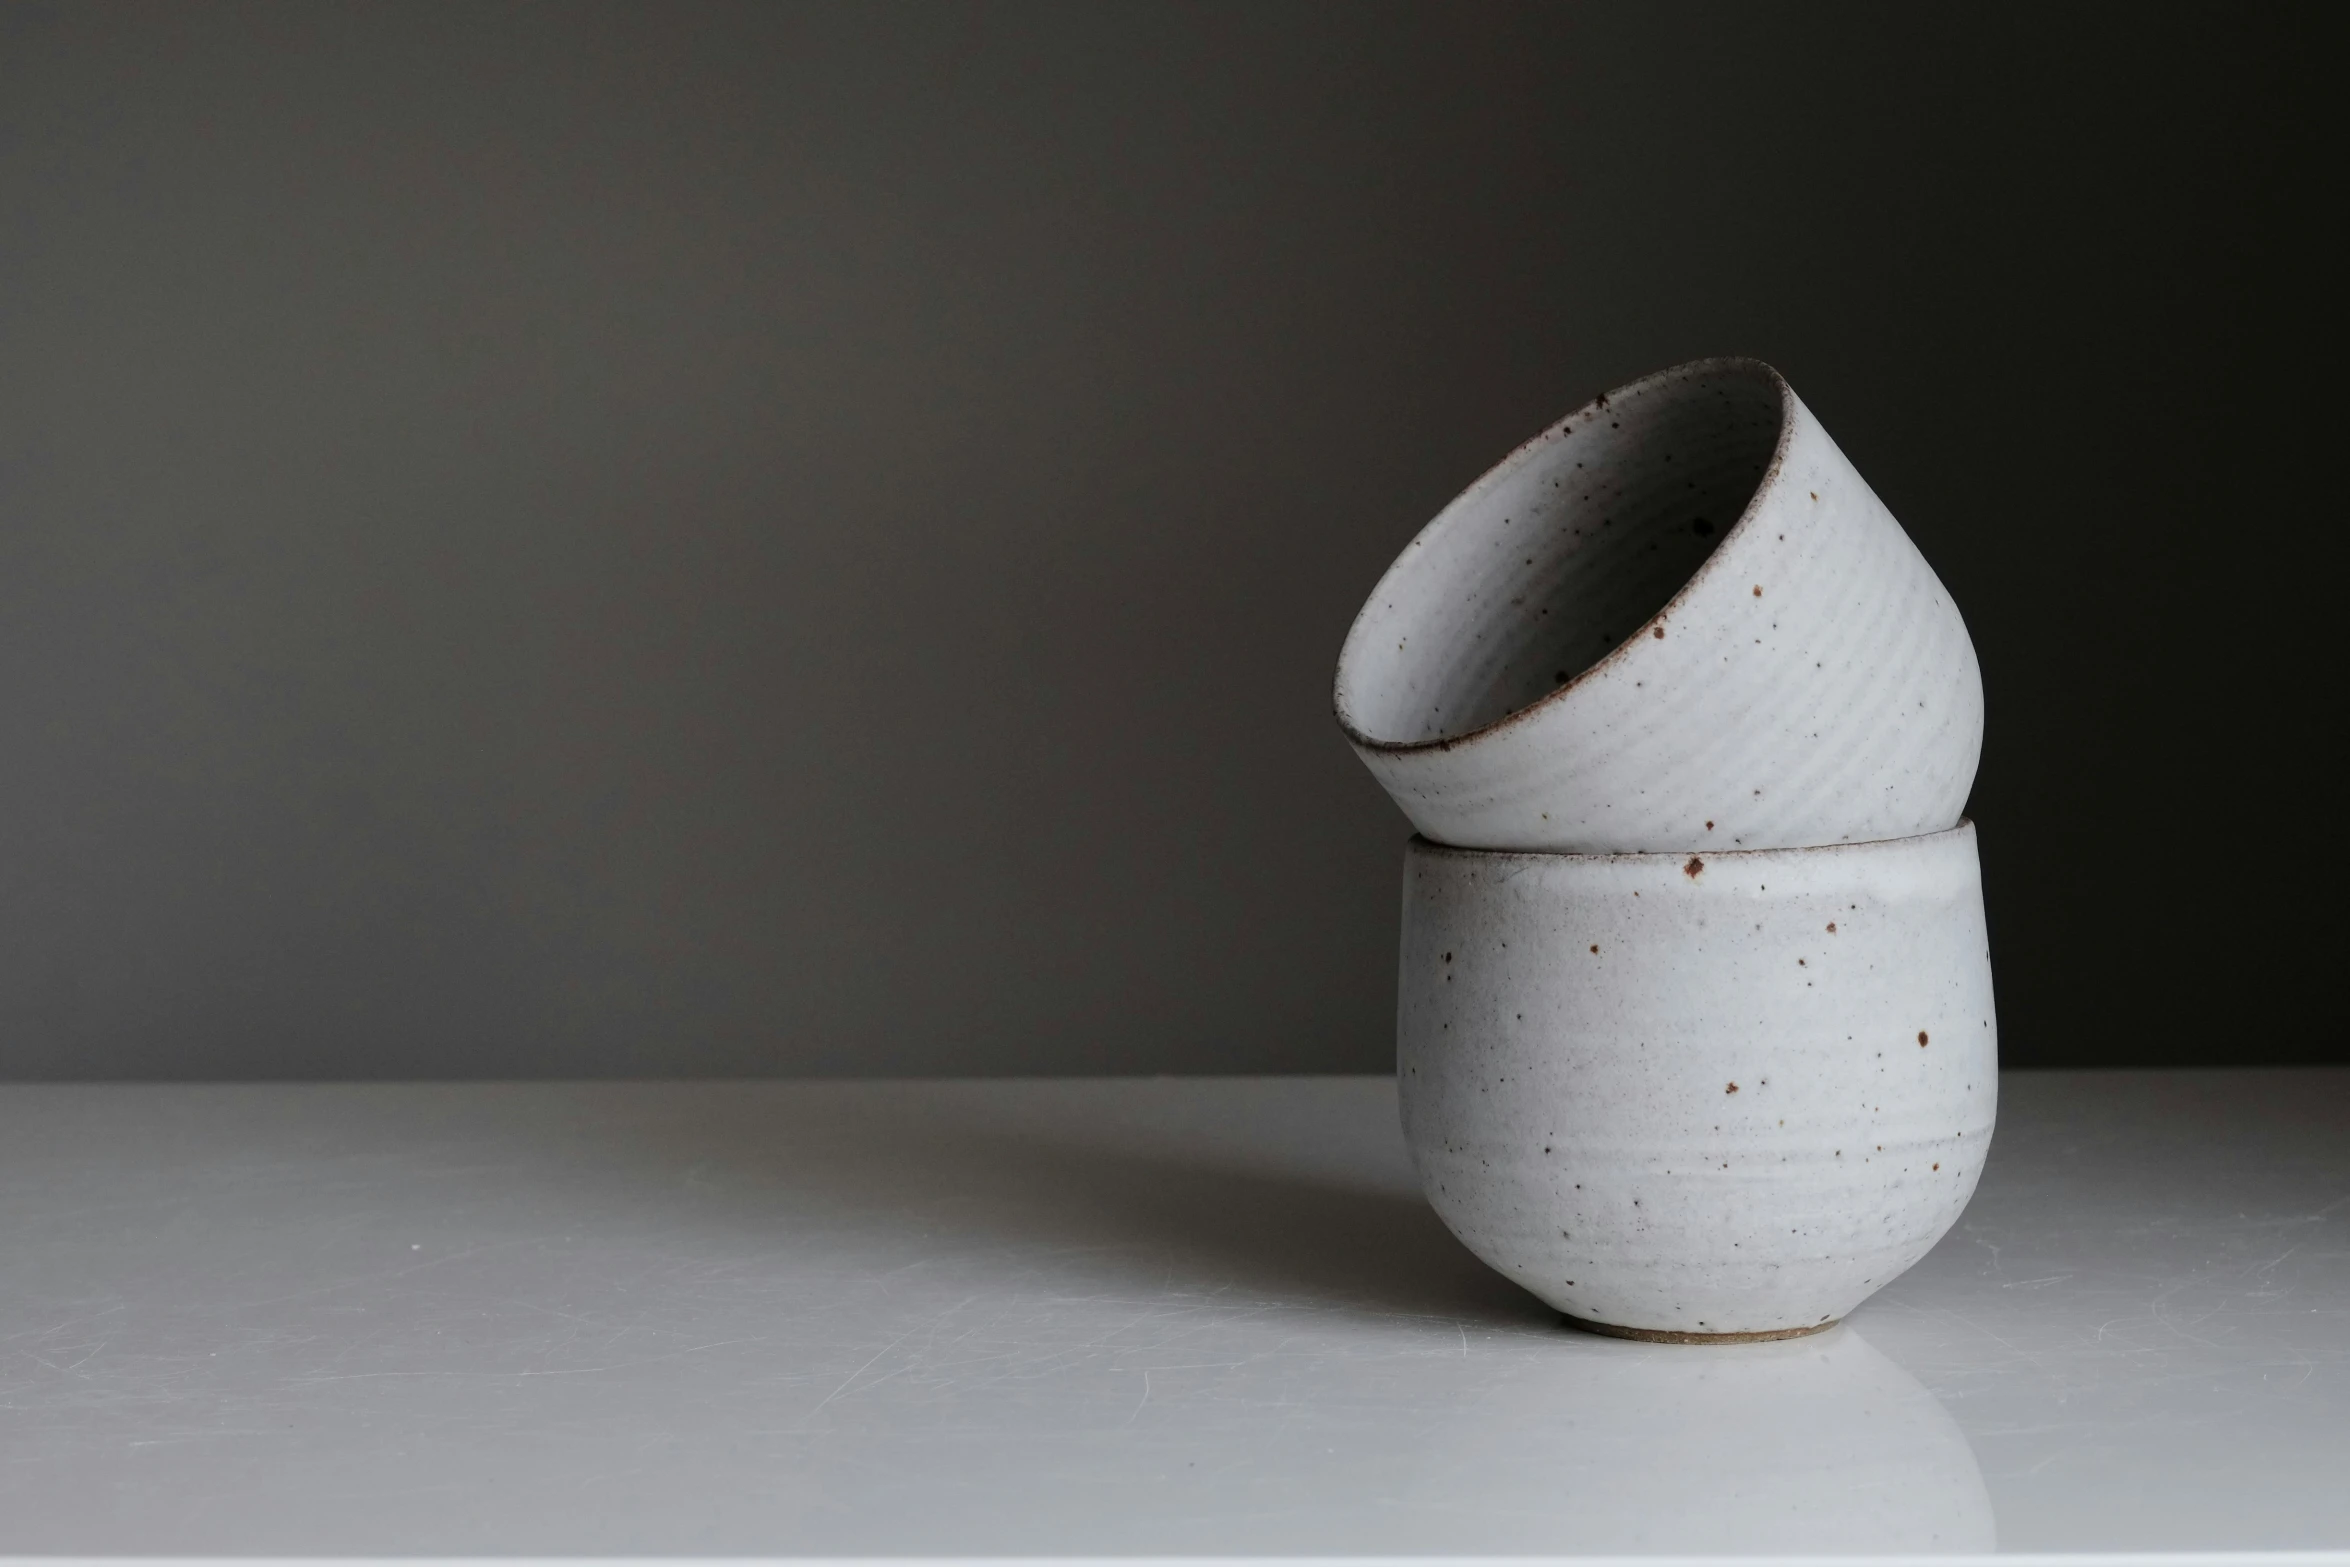 white ceramic vase placed on plain surface on gray background